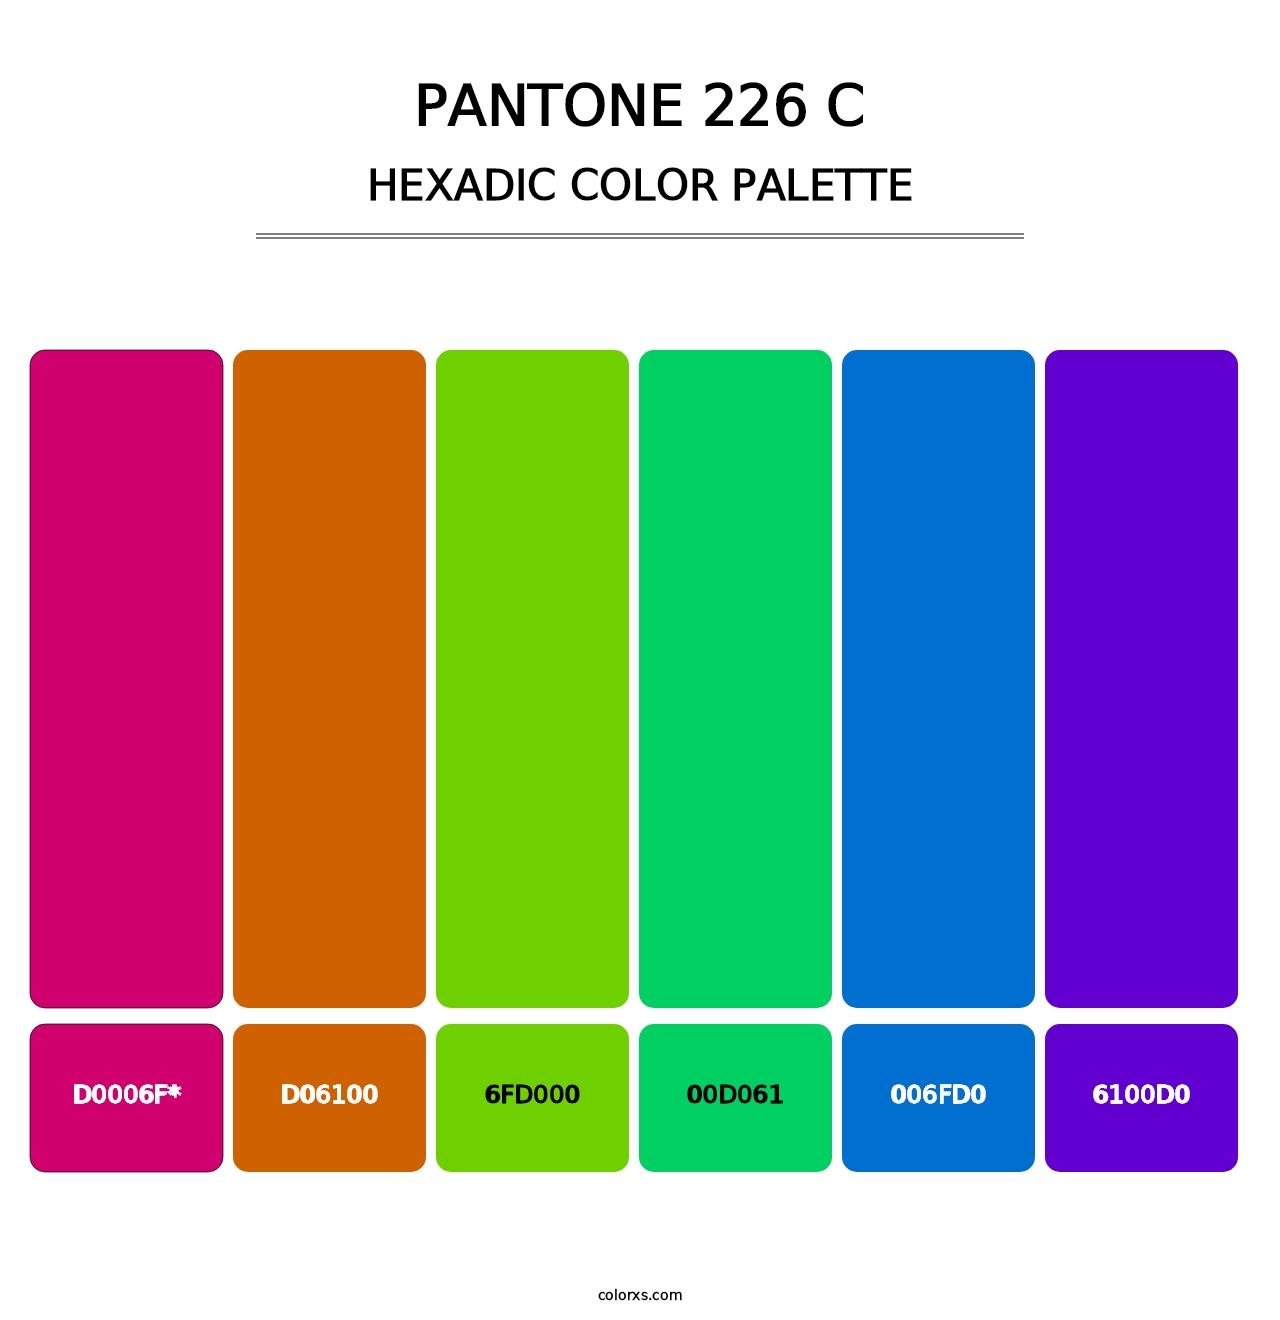 PANTONE 226 C - Hexadic Color Palette